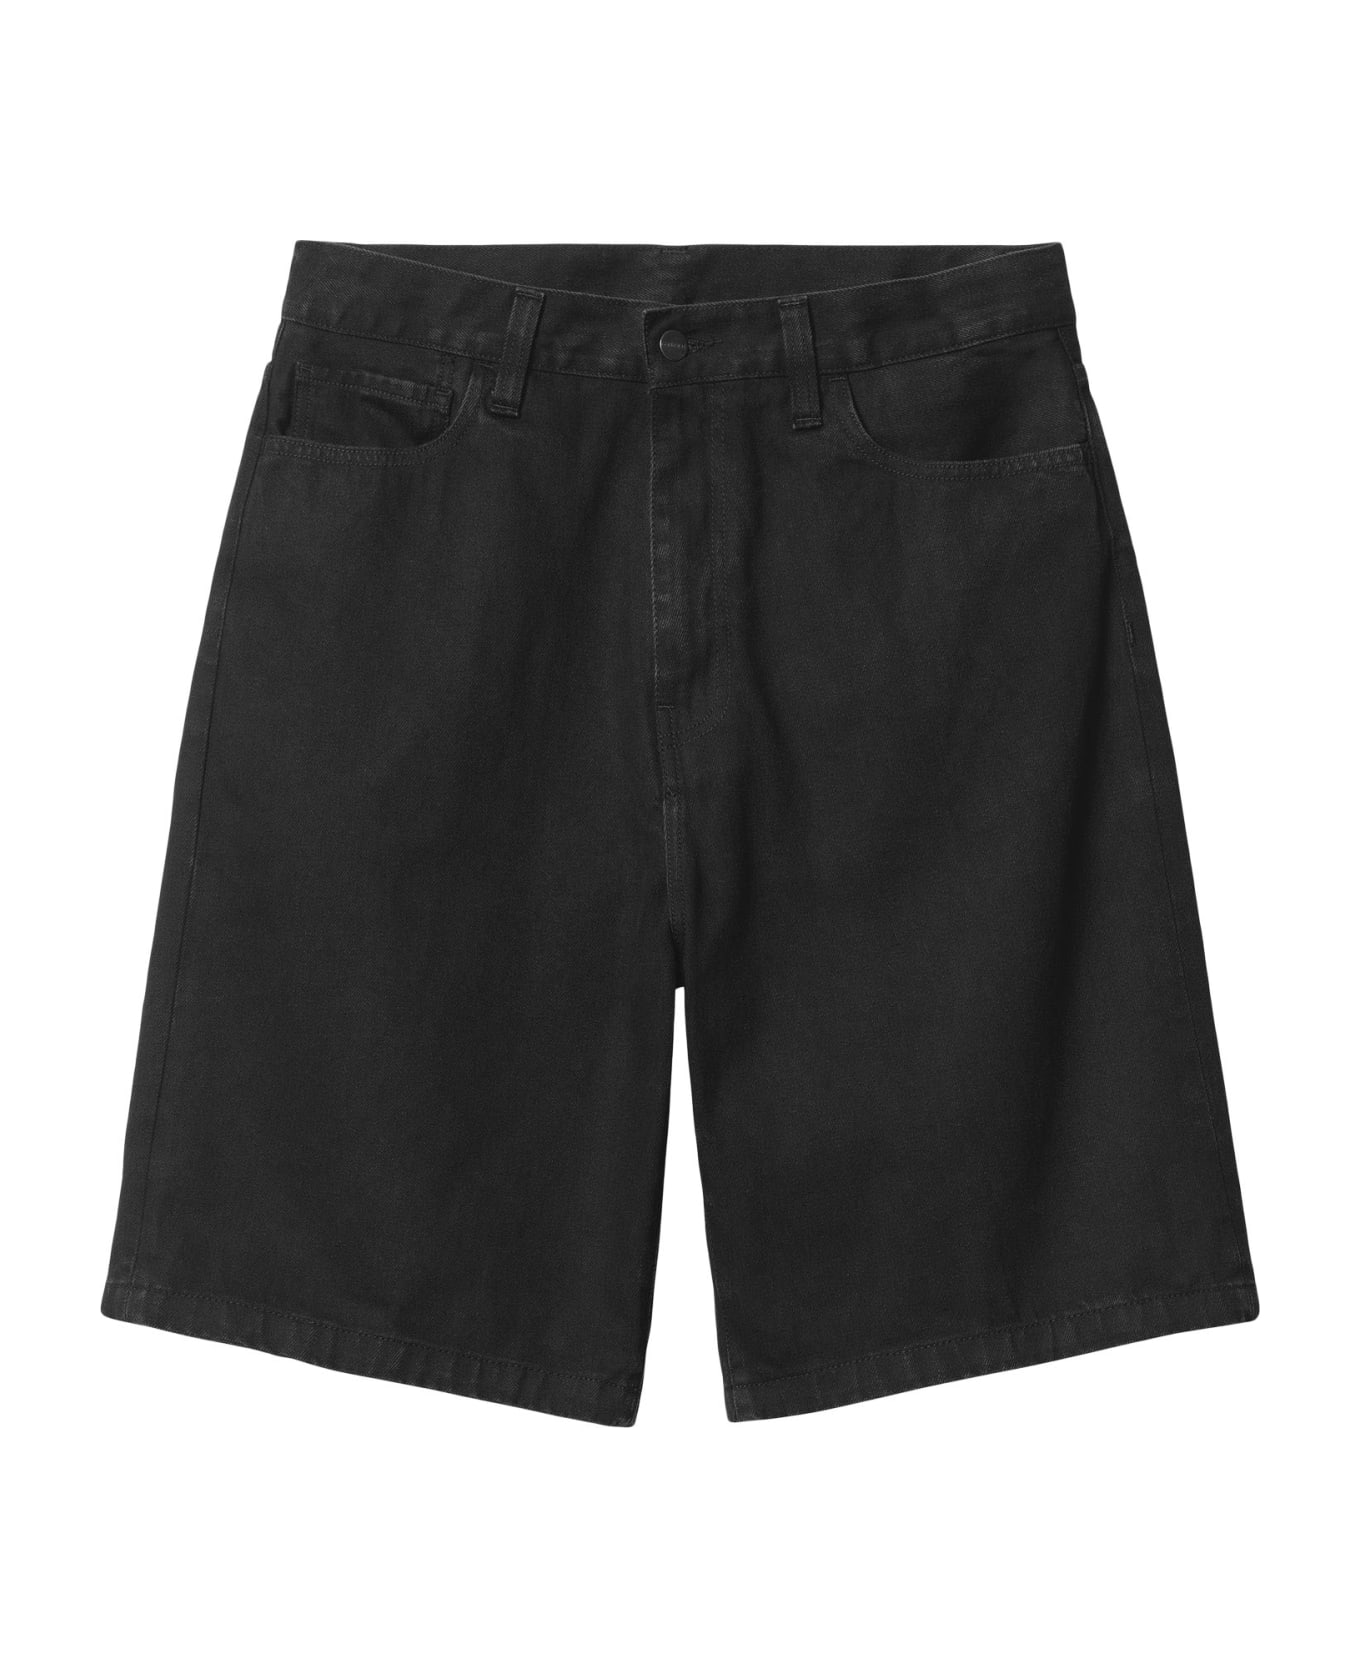 Carhartt Shorts Black - Black